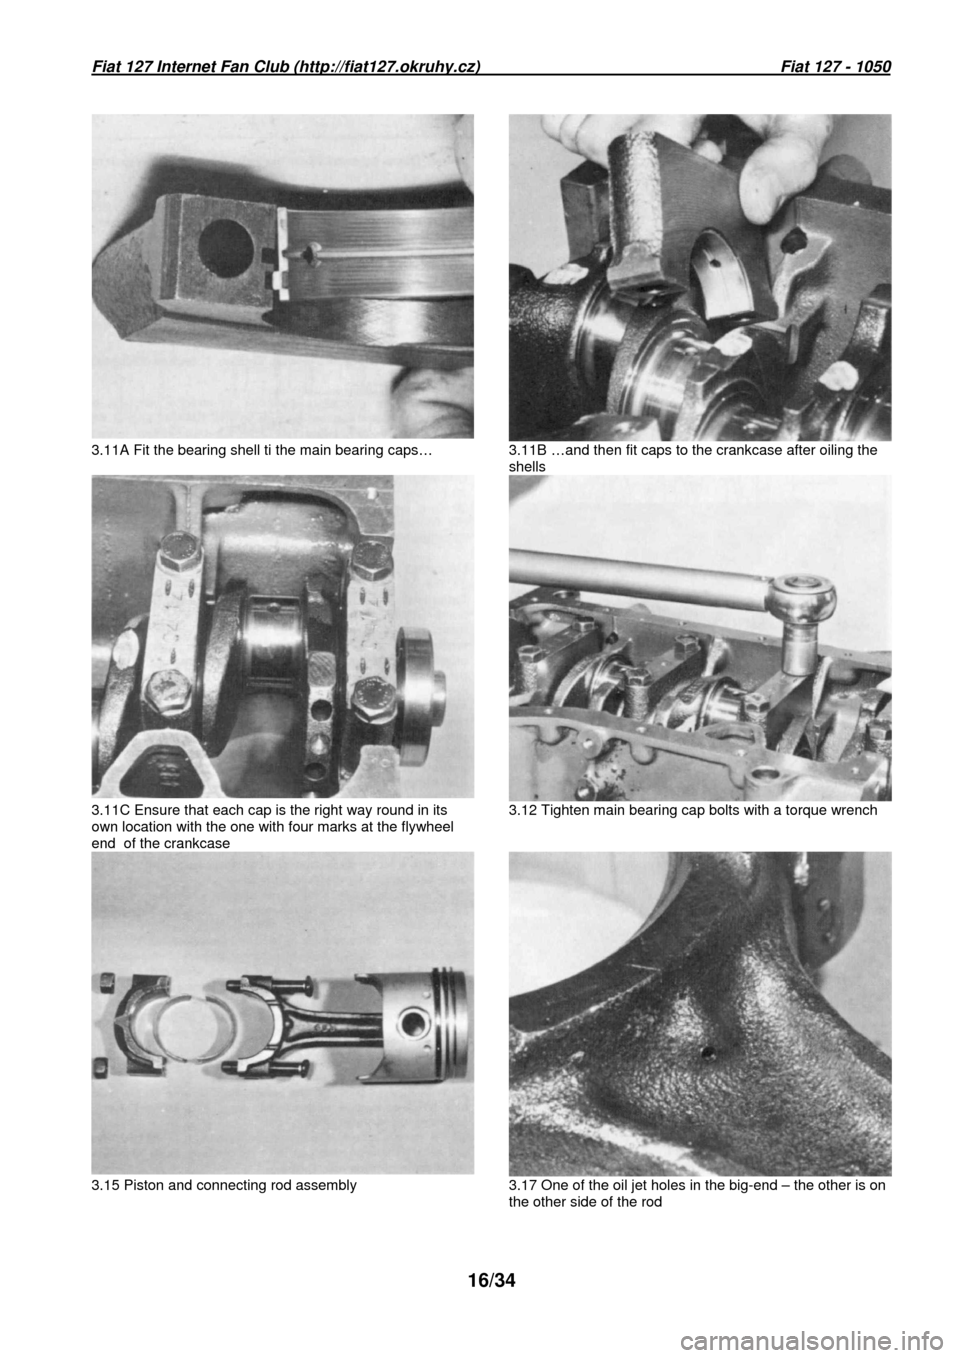 FIAT 127 1979 2.G Workshop Manual Fiat 127 Internet Fan Club (http://fiat127.okruhy.cz)                                                                   Fiat 127 - 1050 
16/34 
 
 
 3.11A Fit the bearing shell ti the main bearing cap